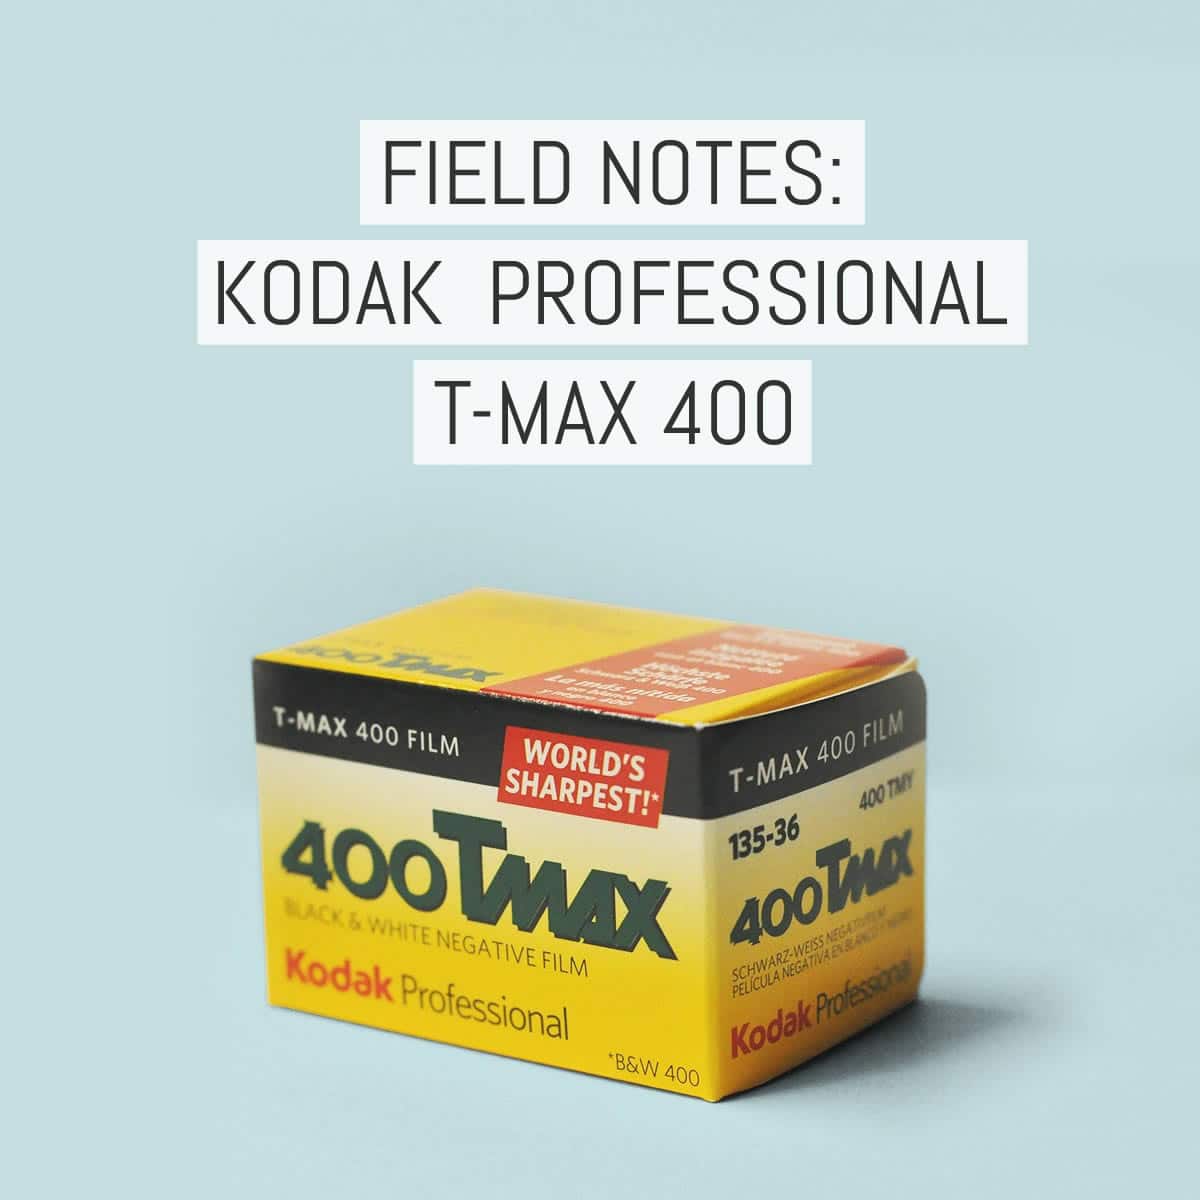 Film notes: Kodak Professional T-MAX 400